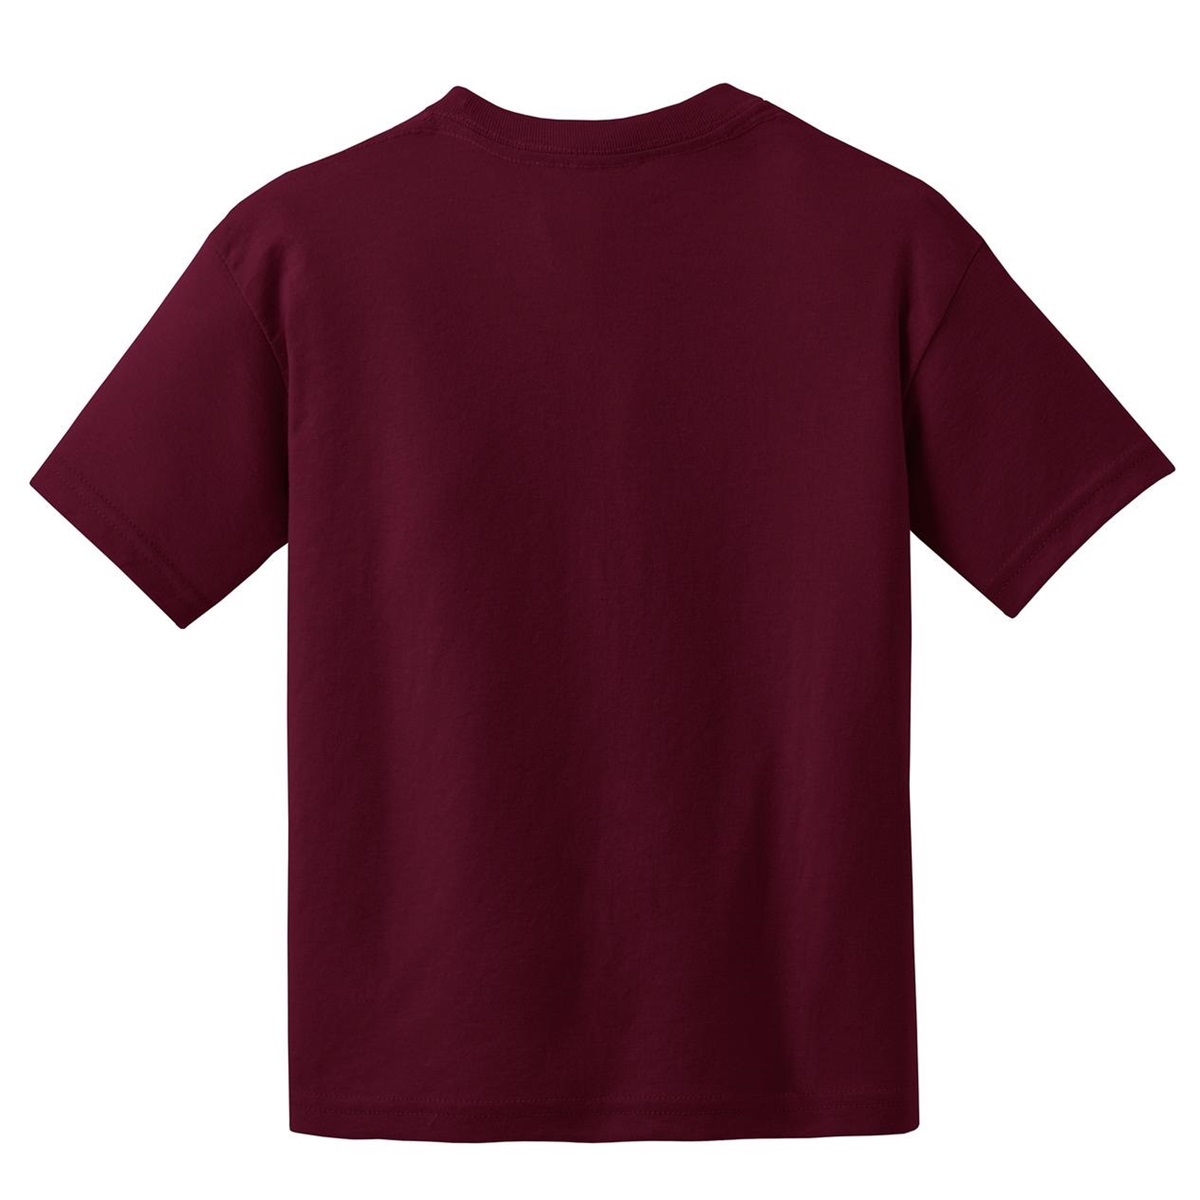  Gildan  8000B Youth DryBlend T Shirt Maroon  FullSource com